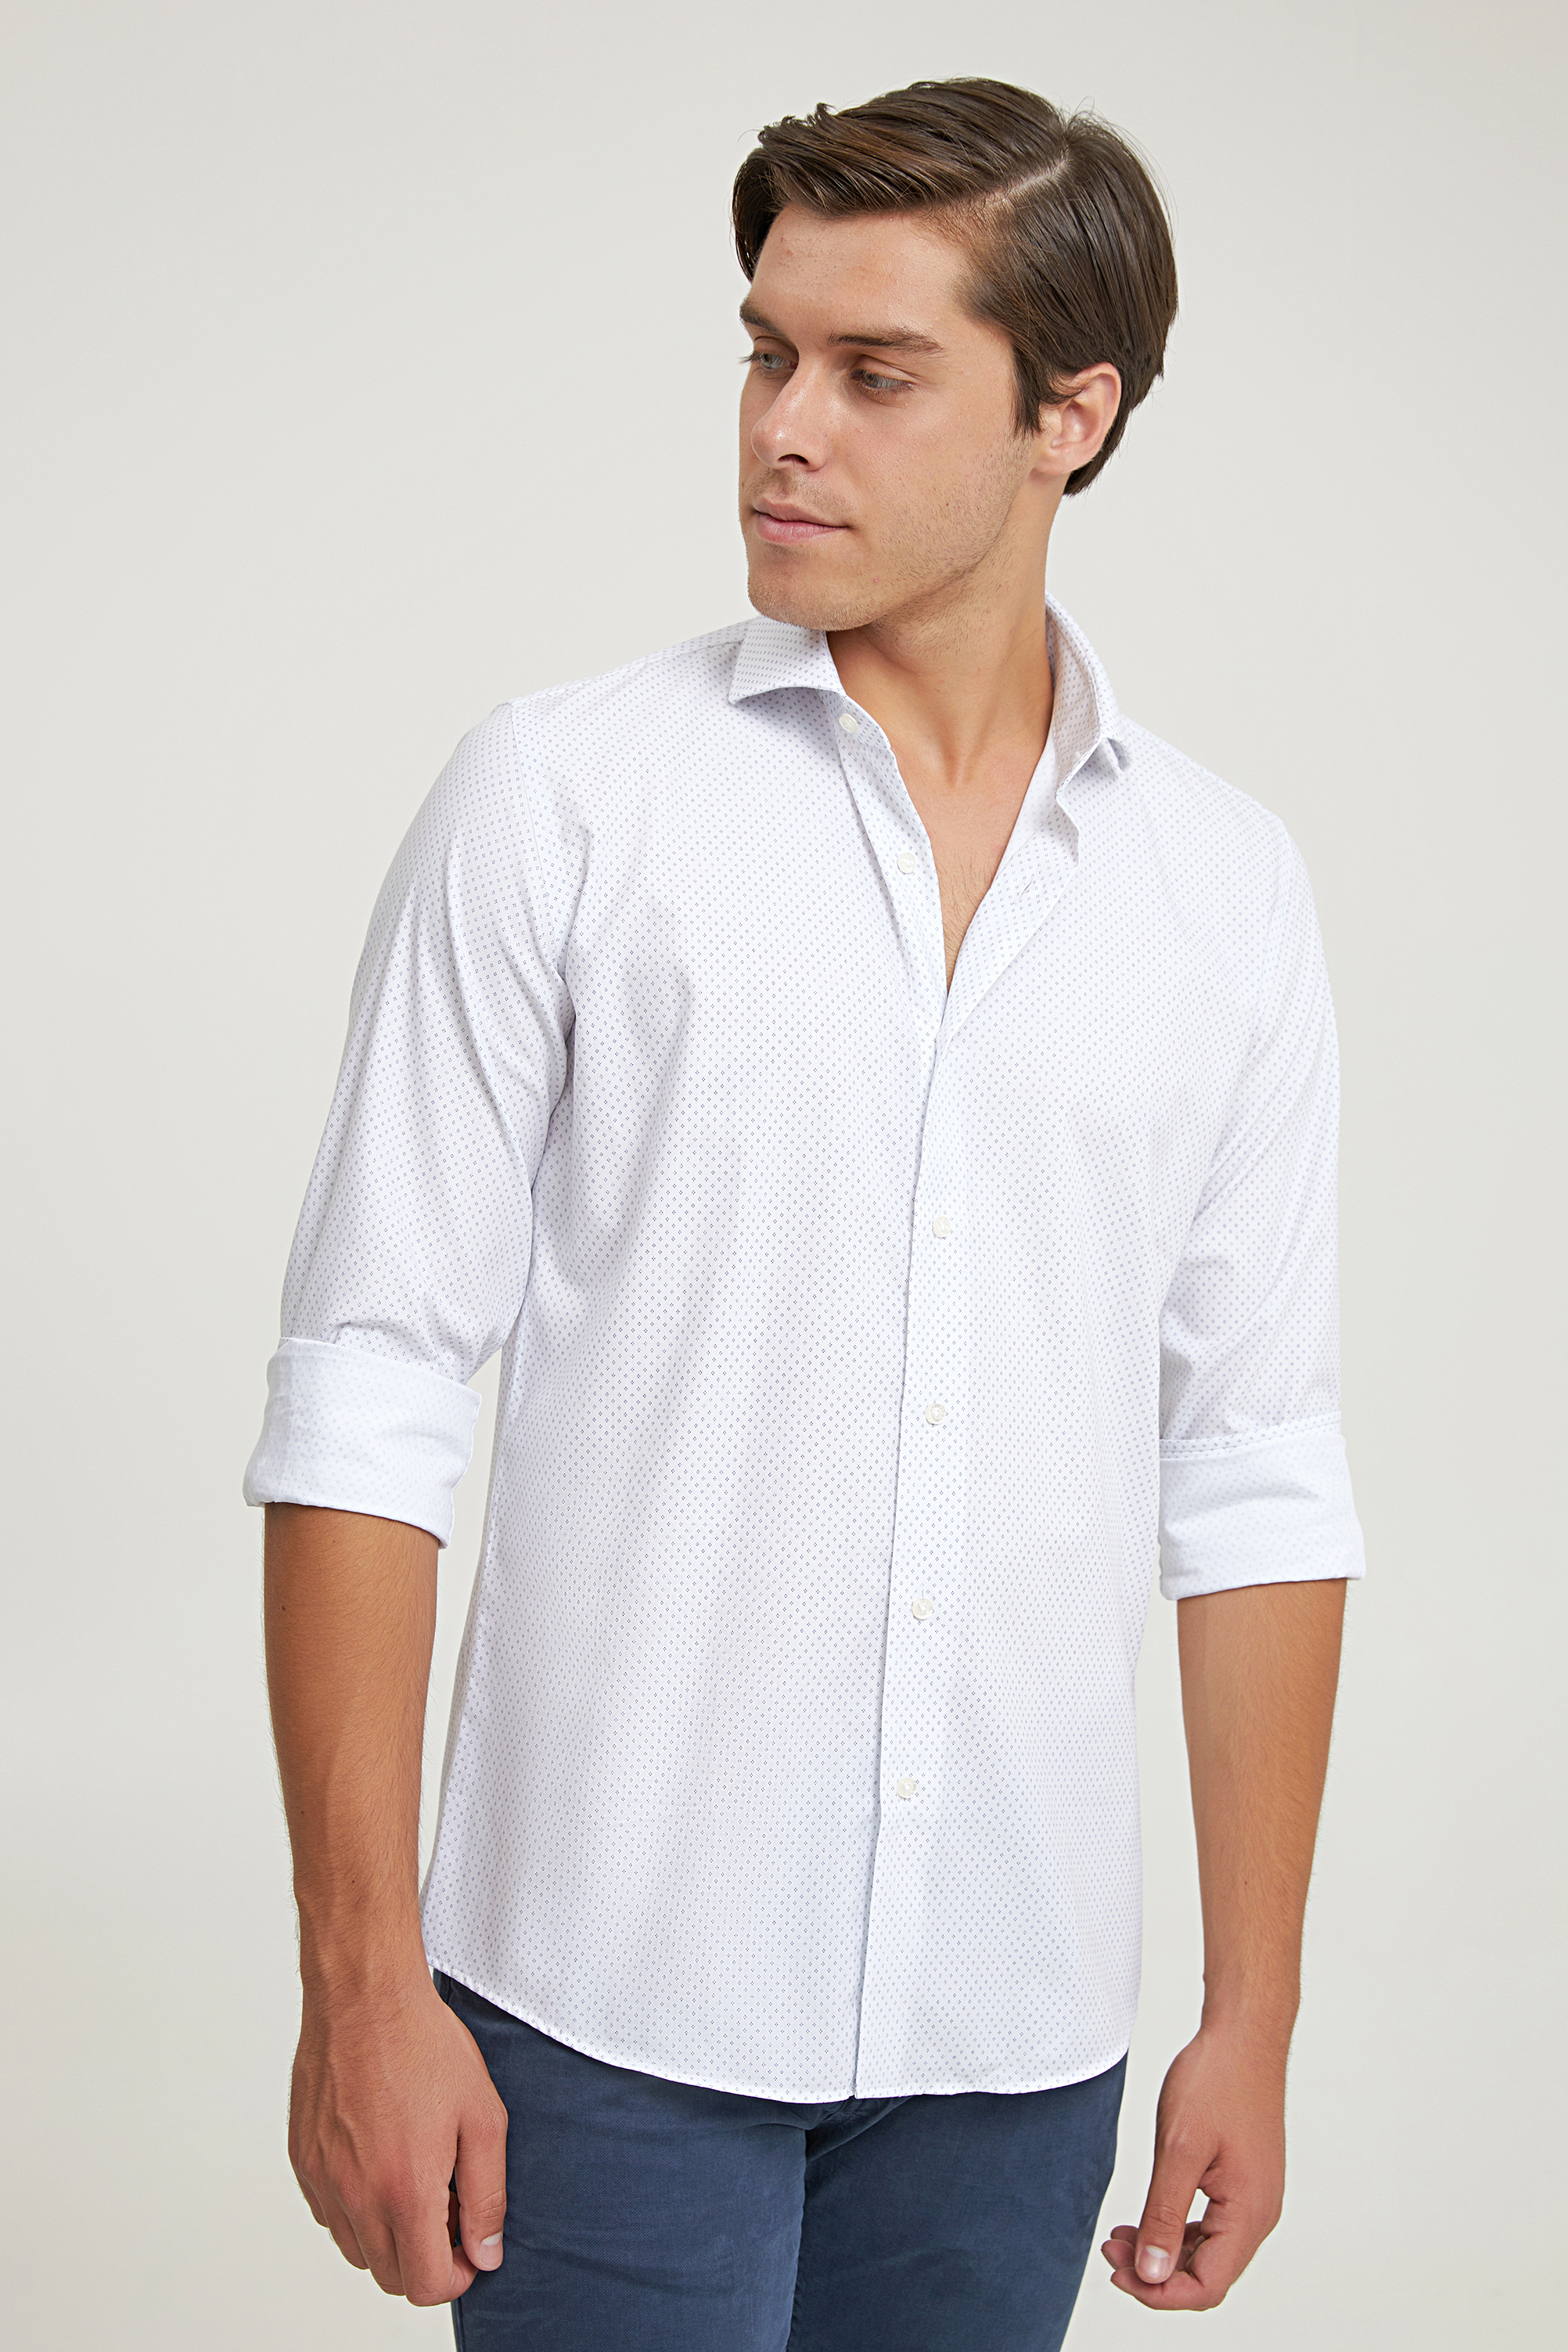 Damat Tween Damat Slim Fit Beyaz %100 Pamuk Gömlek. 2